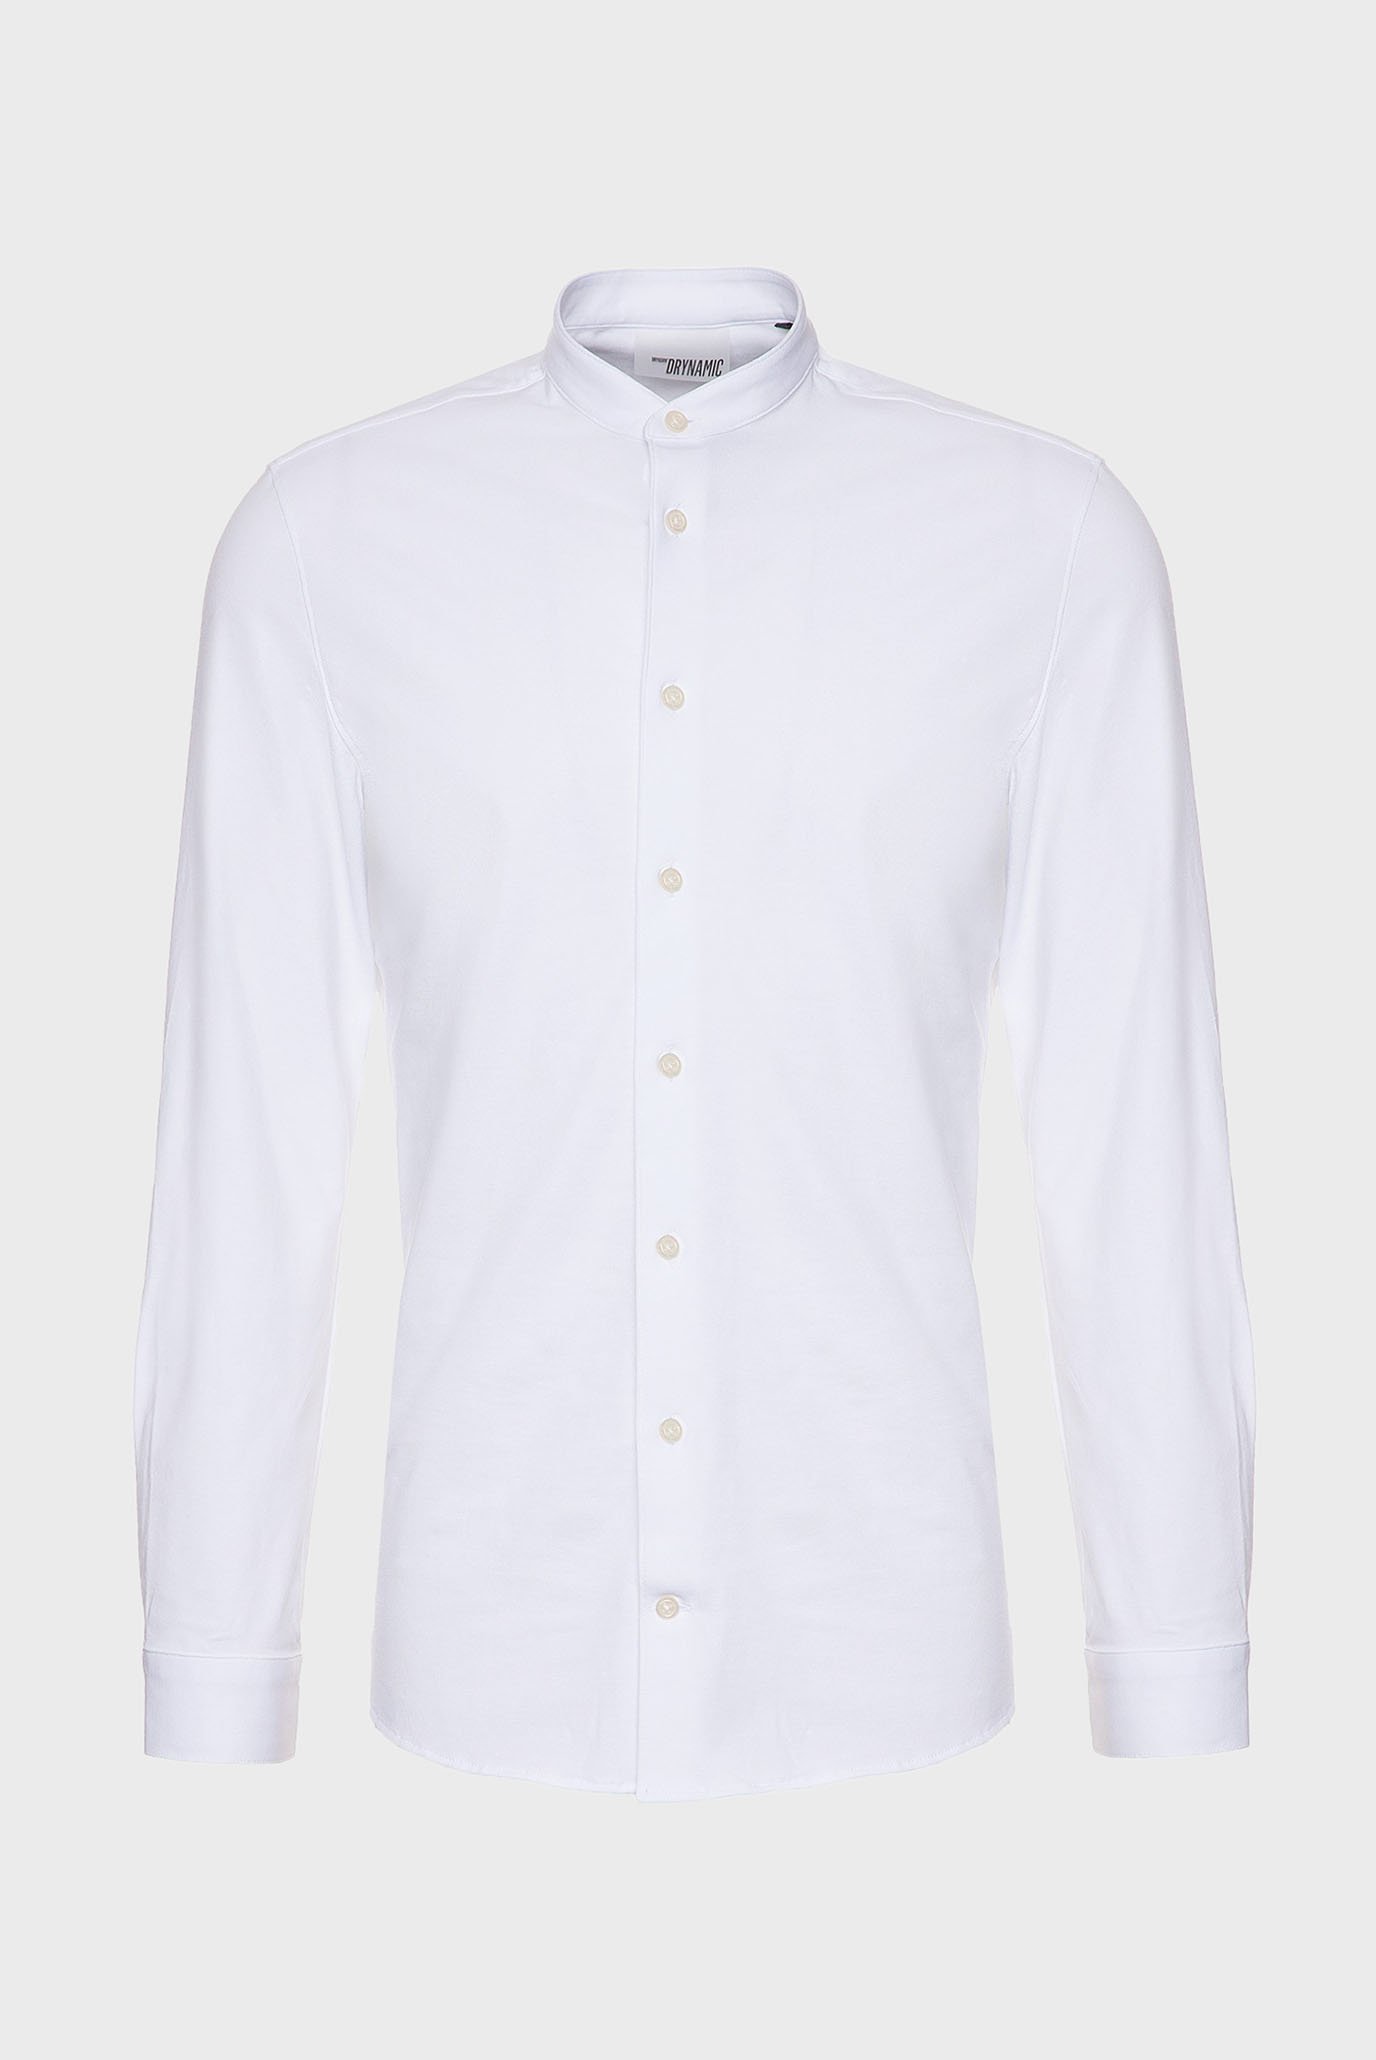 Мужская белая рубашка TIO 1